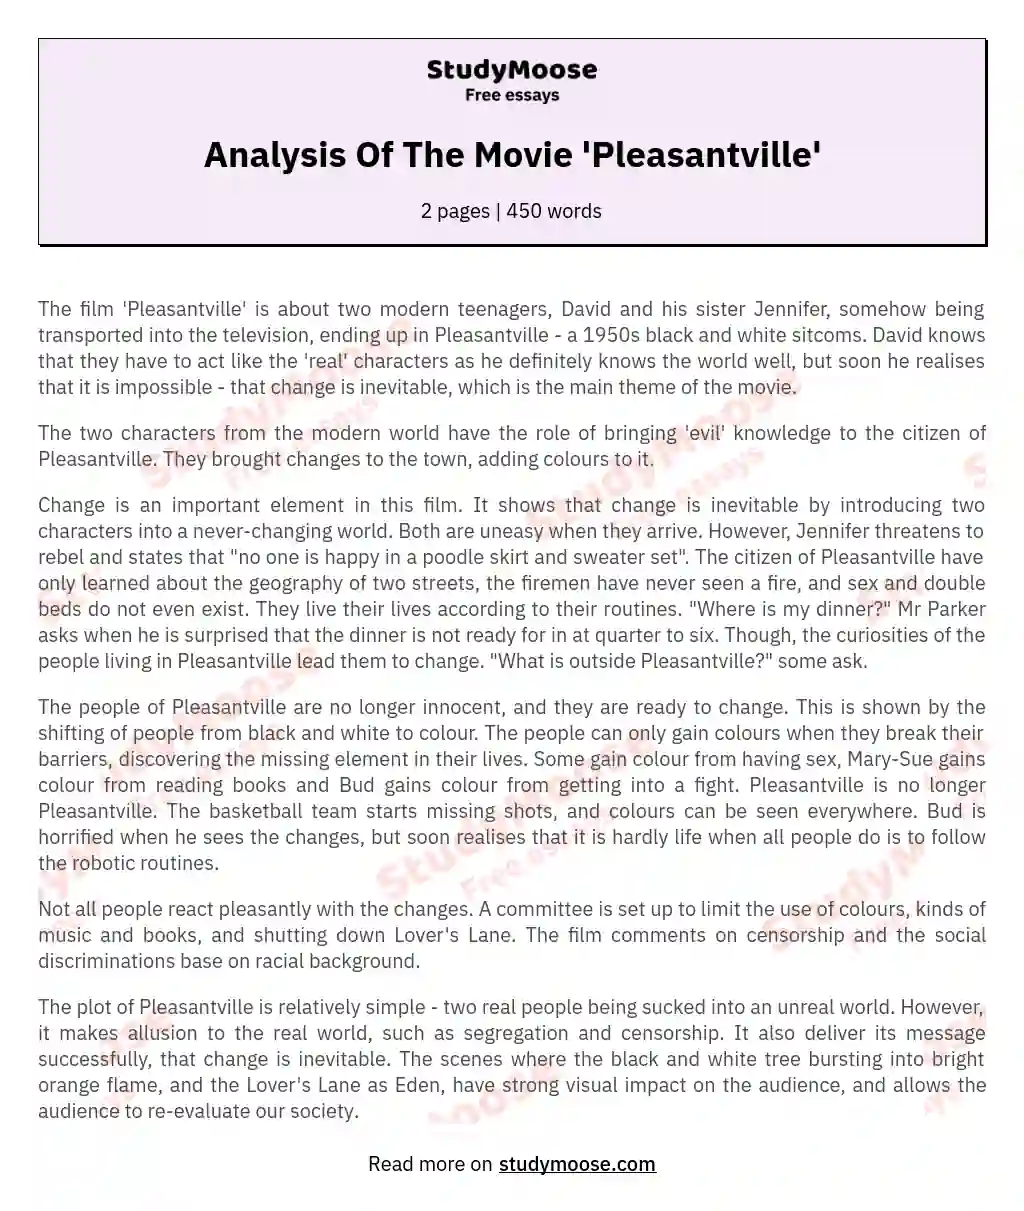 Analysis Of The Movie 'Pleasantville' essay